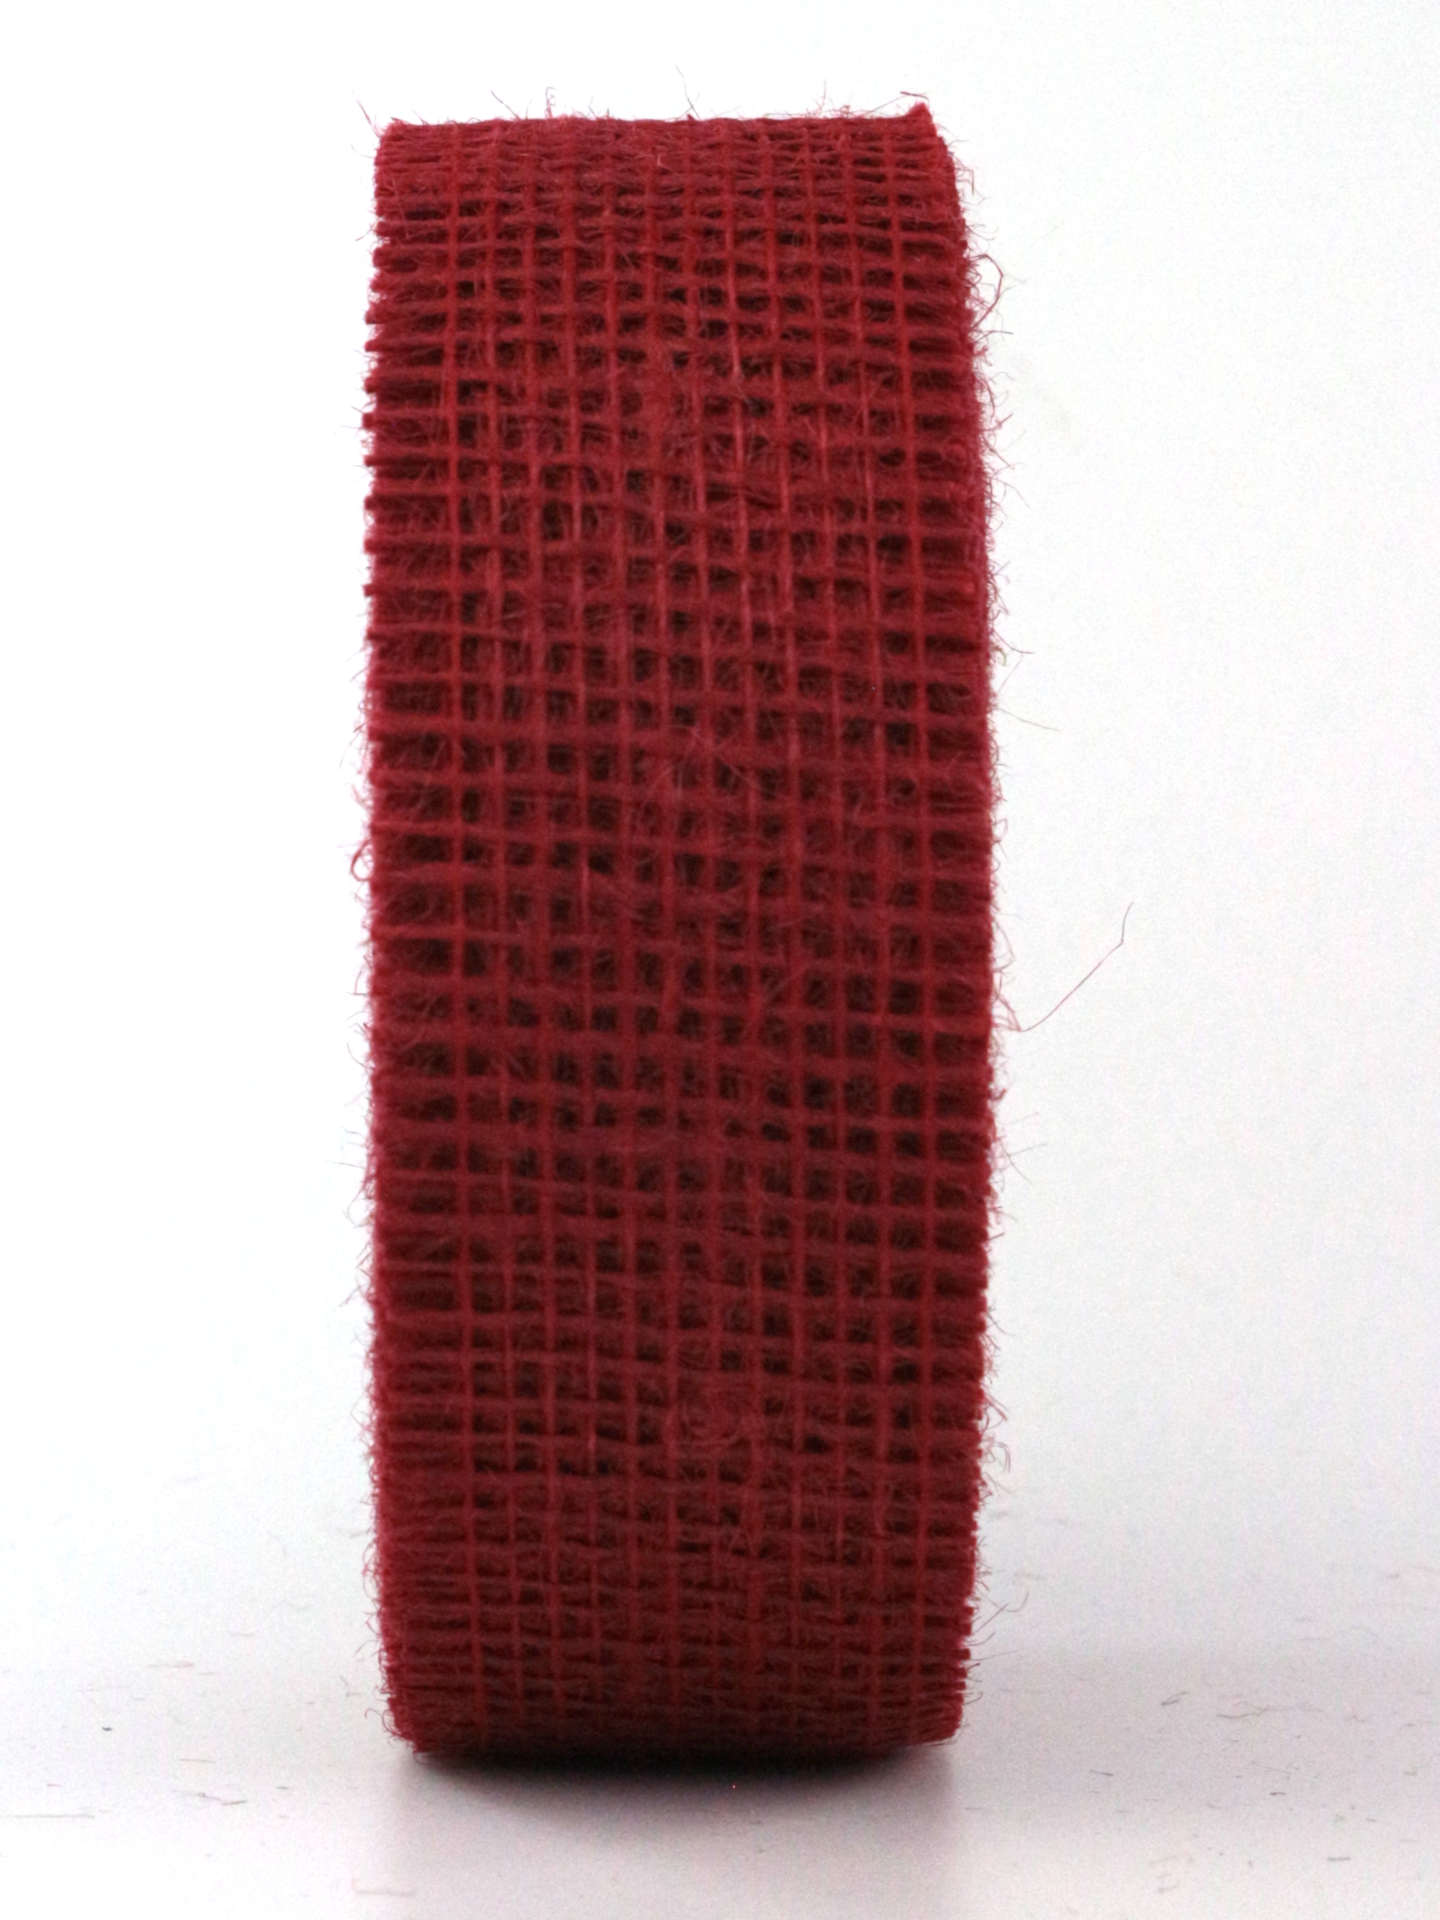 Juteband, altrot, 40 mm breit, 25 m Rolle - eco-baender, geschenkband, juteband, andere-baender, dauersortiment